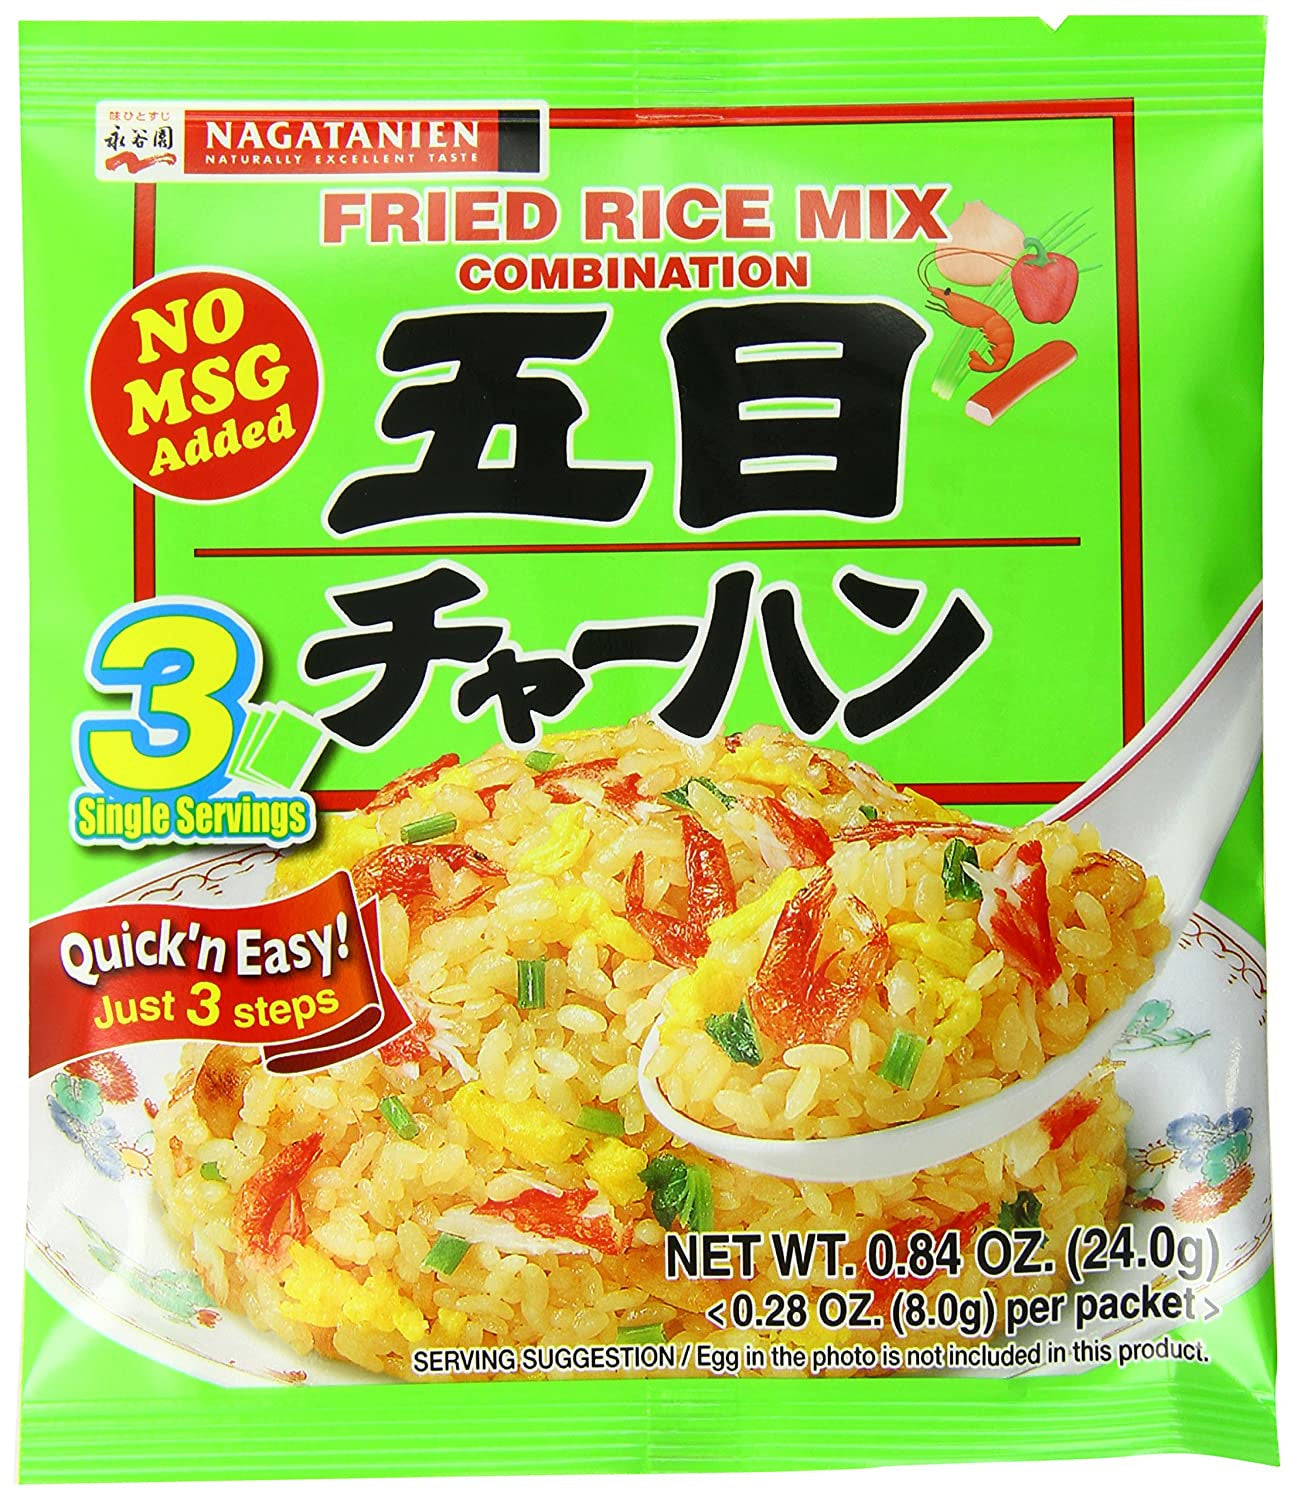 Nagatanien Fried Rice Mix Crab Flav. 23.4g